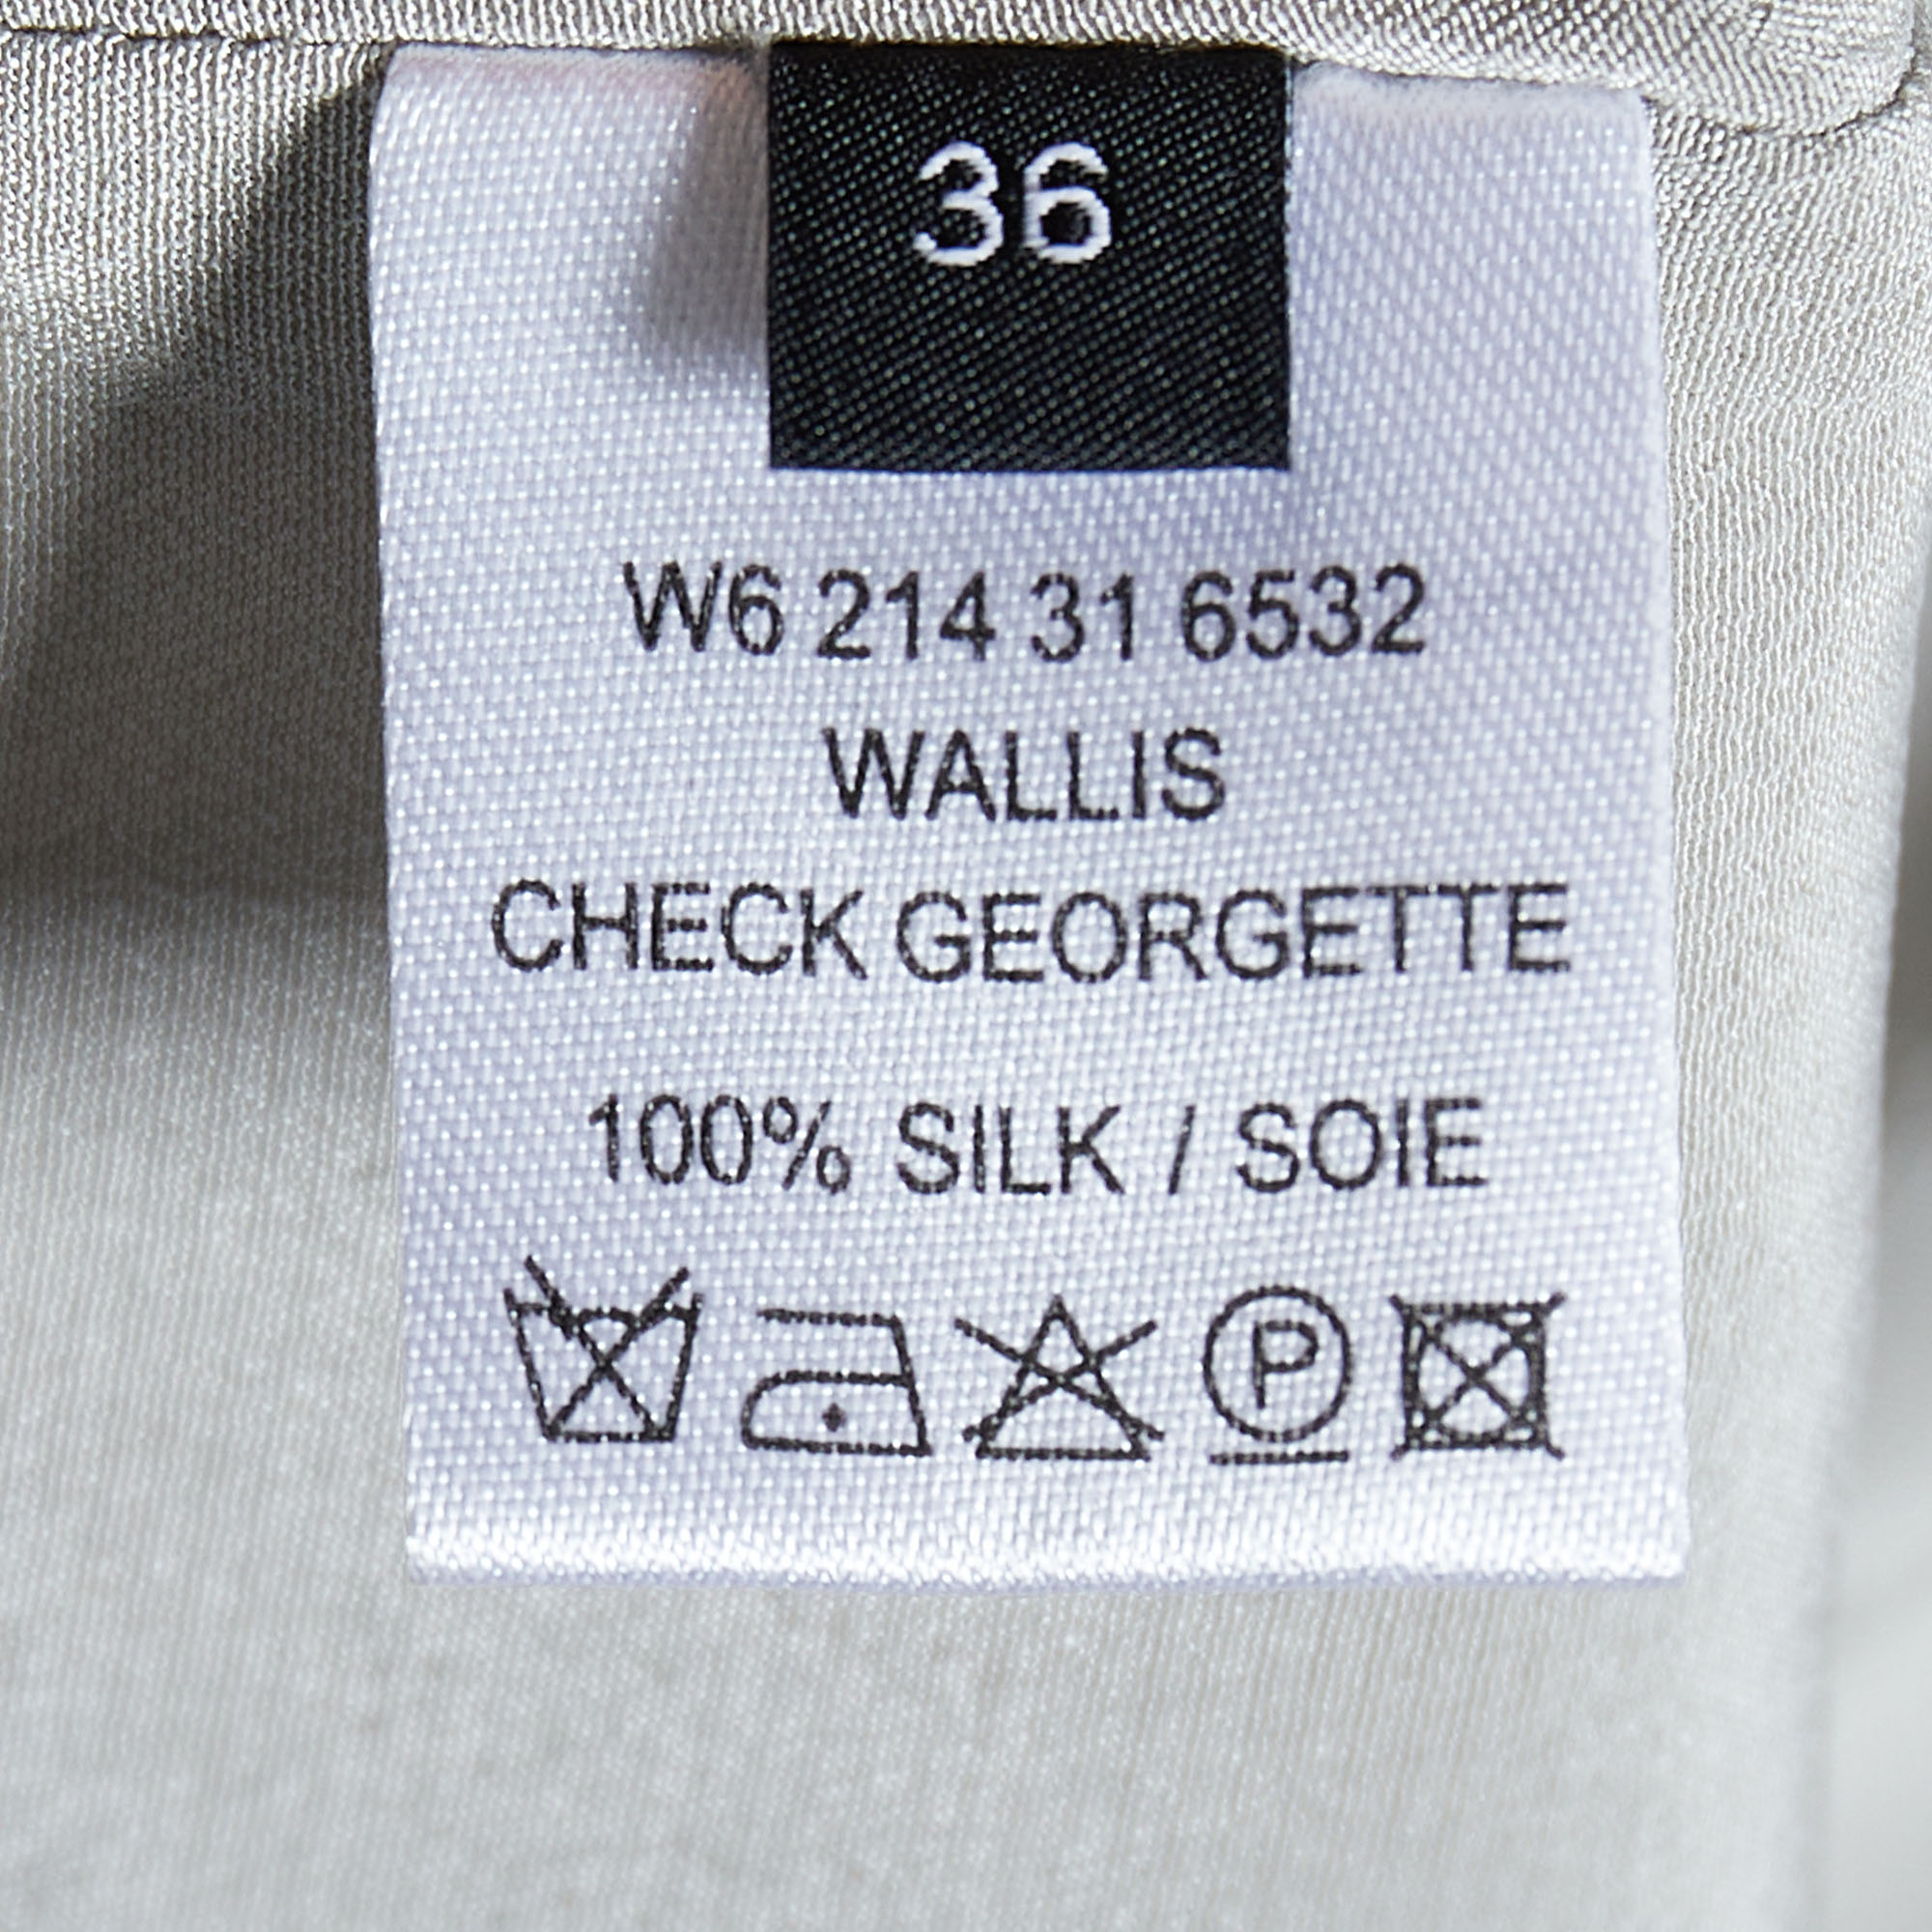 Joseph Multicolor Check Georgette & Grey Wool Overlay Wallis Top S